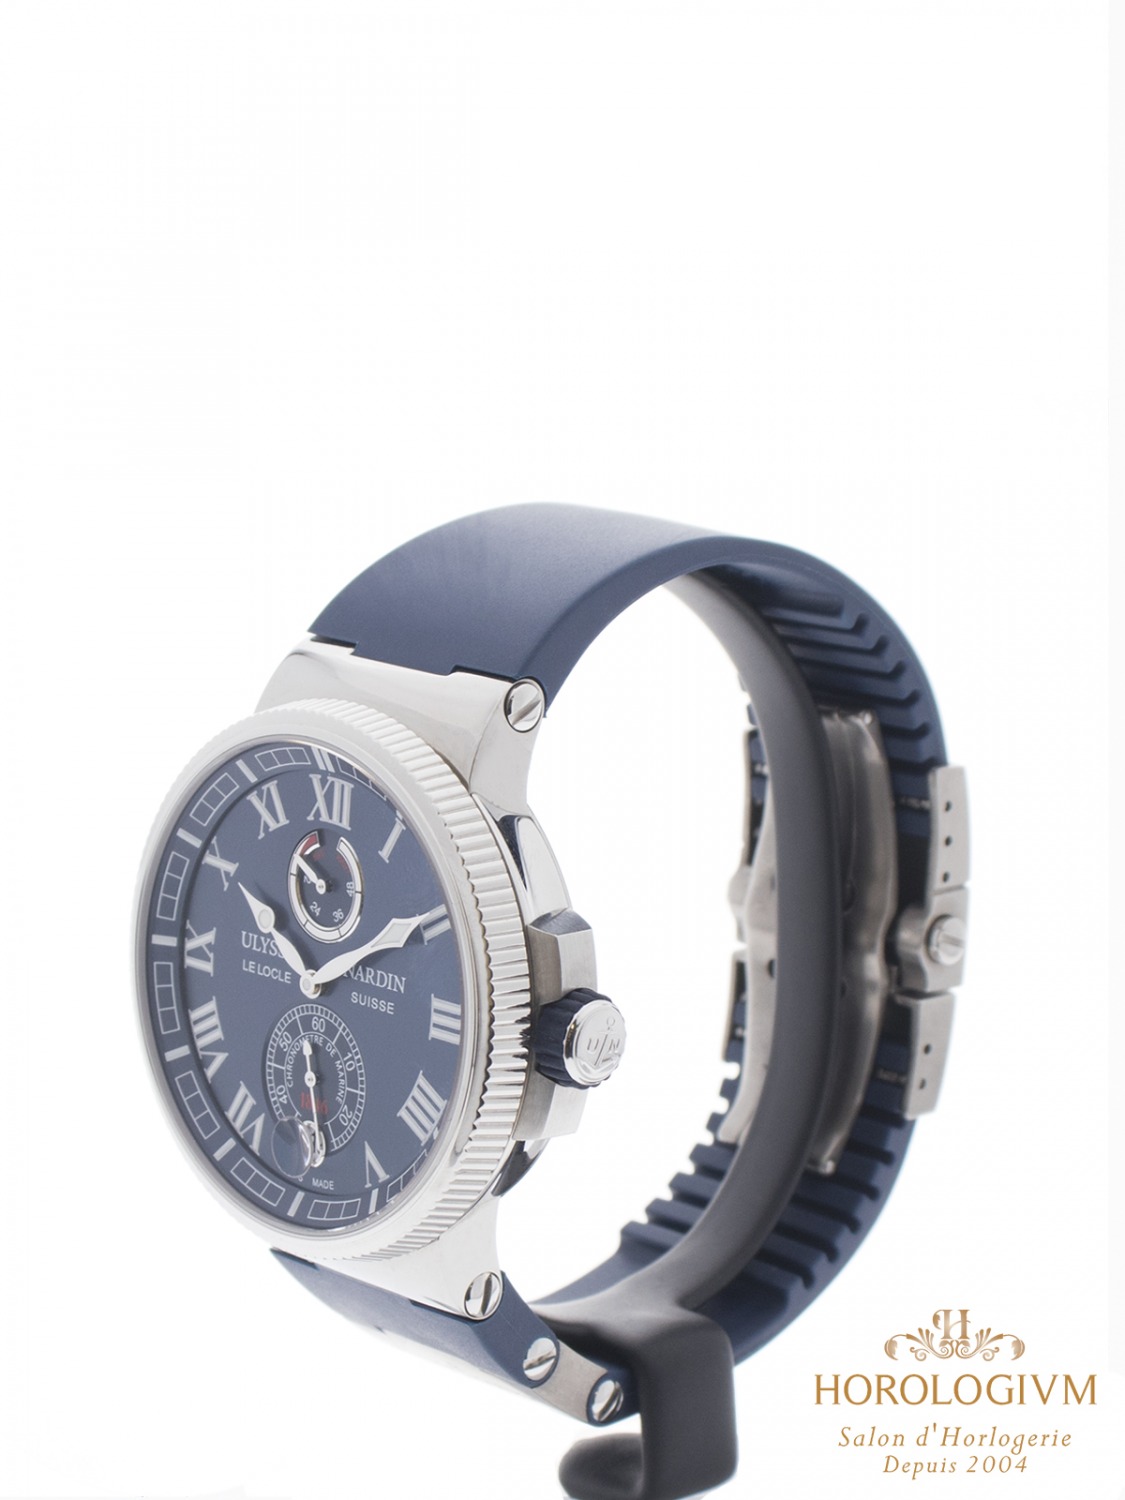 Ulysse Nardin Marine Chronometer 43MM Ref. 1183-126 watch, silver